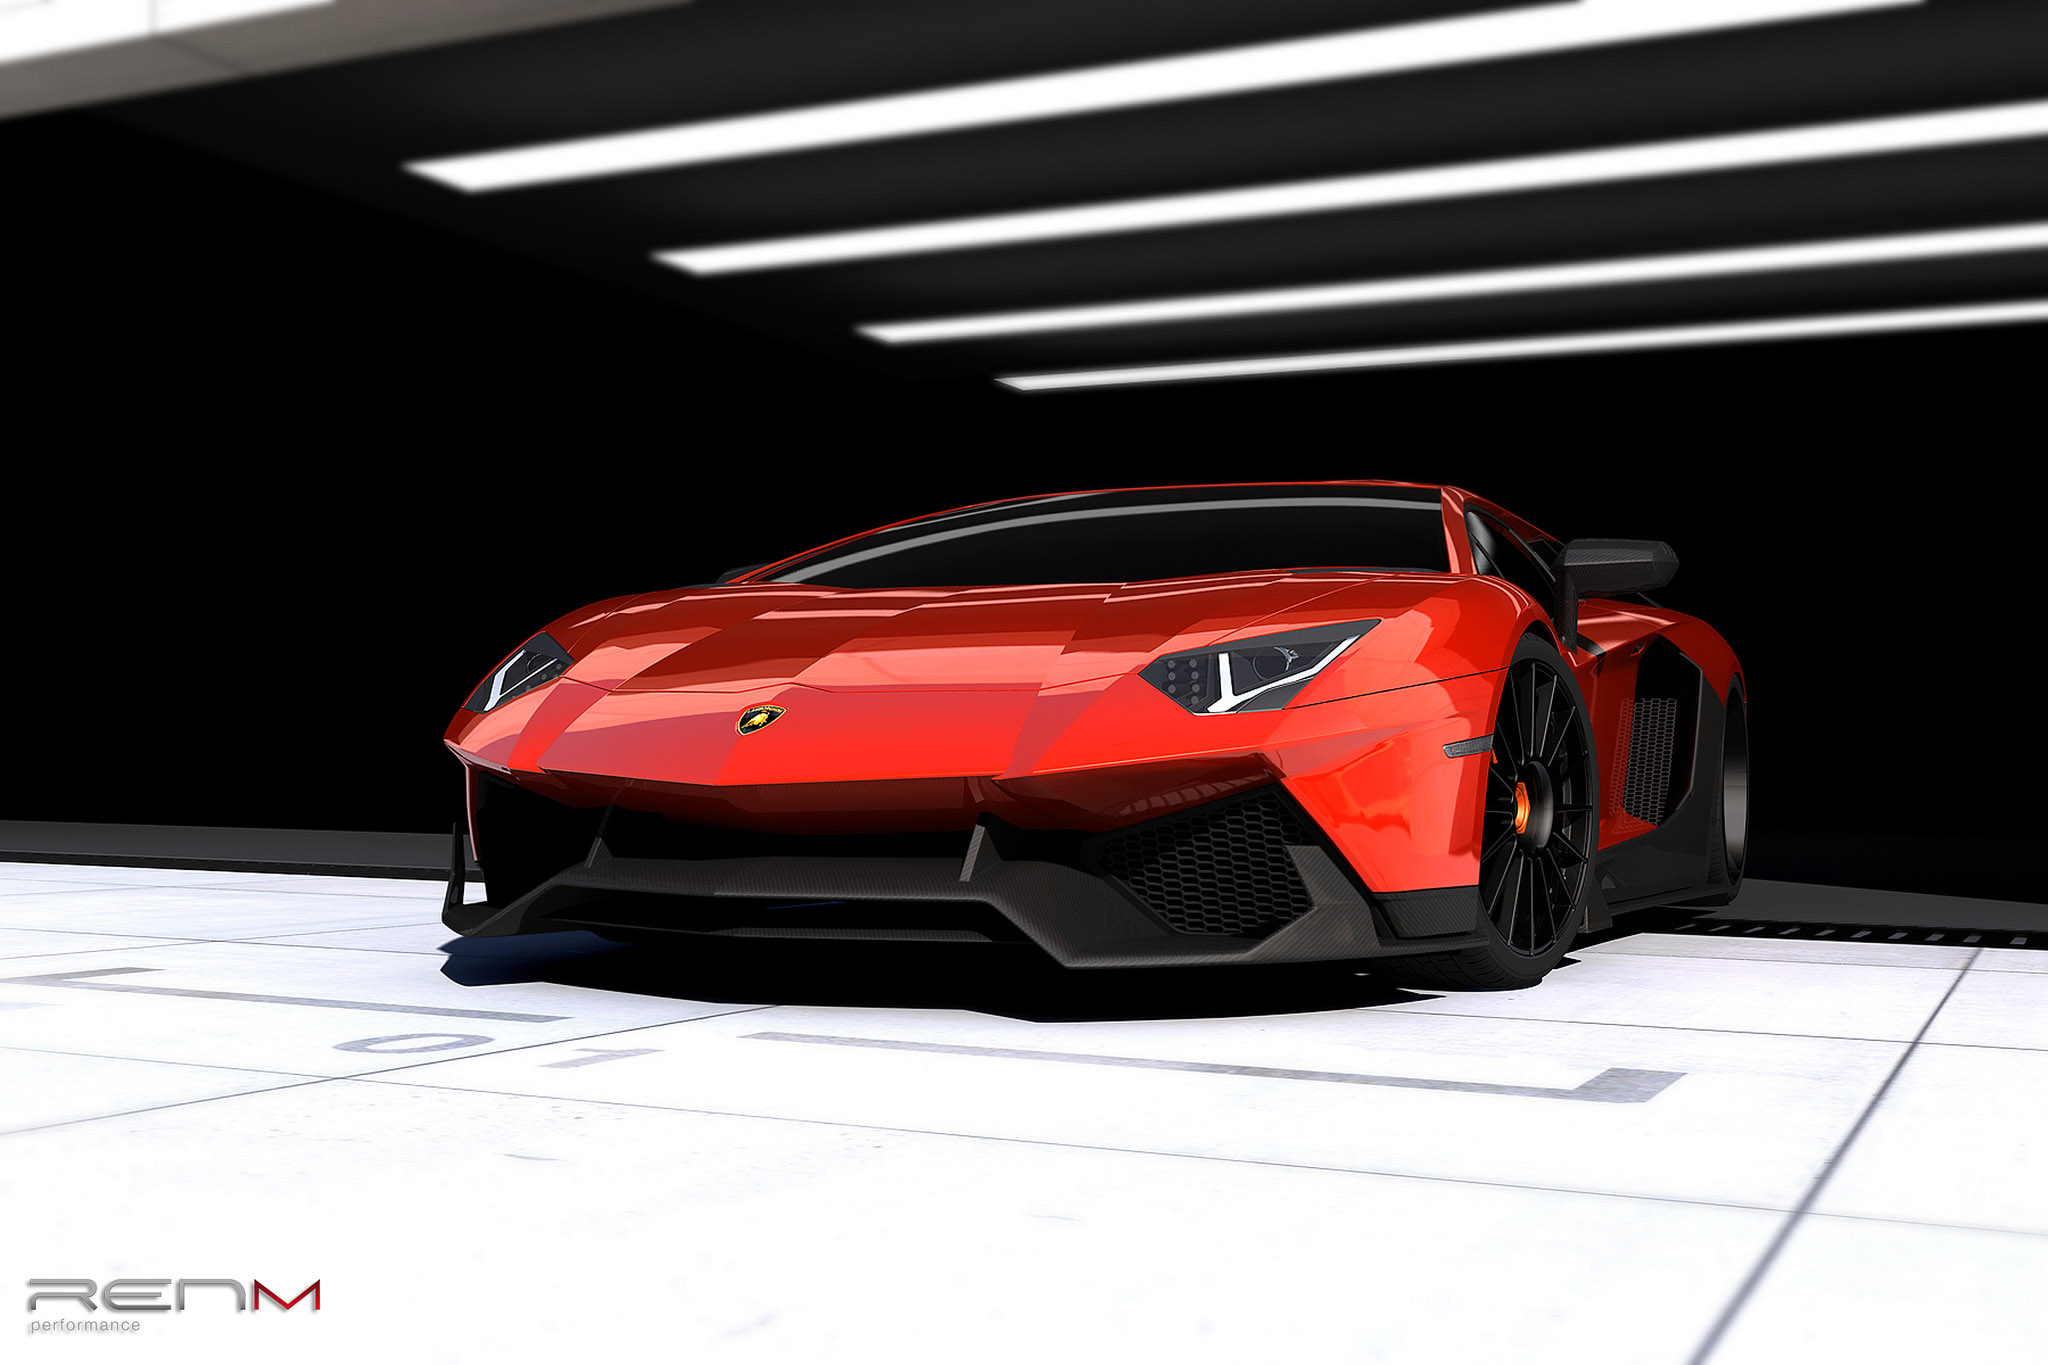 2012, Renm performance, Lamborghini, Aventador, Le c, Supercars, Supercar Wallpaper